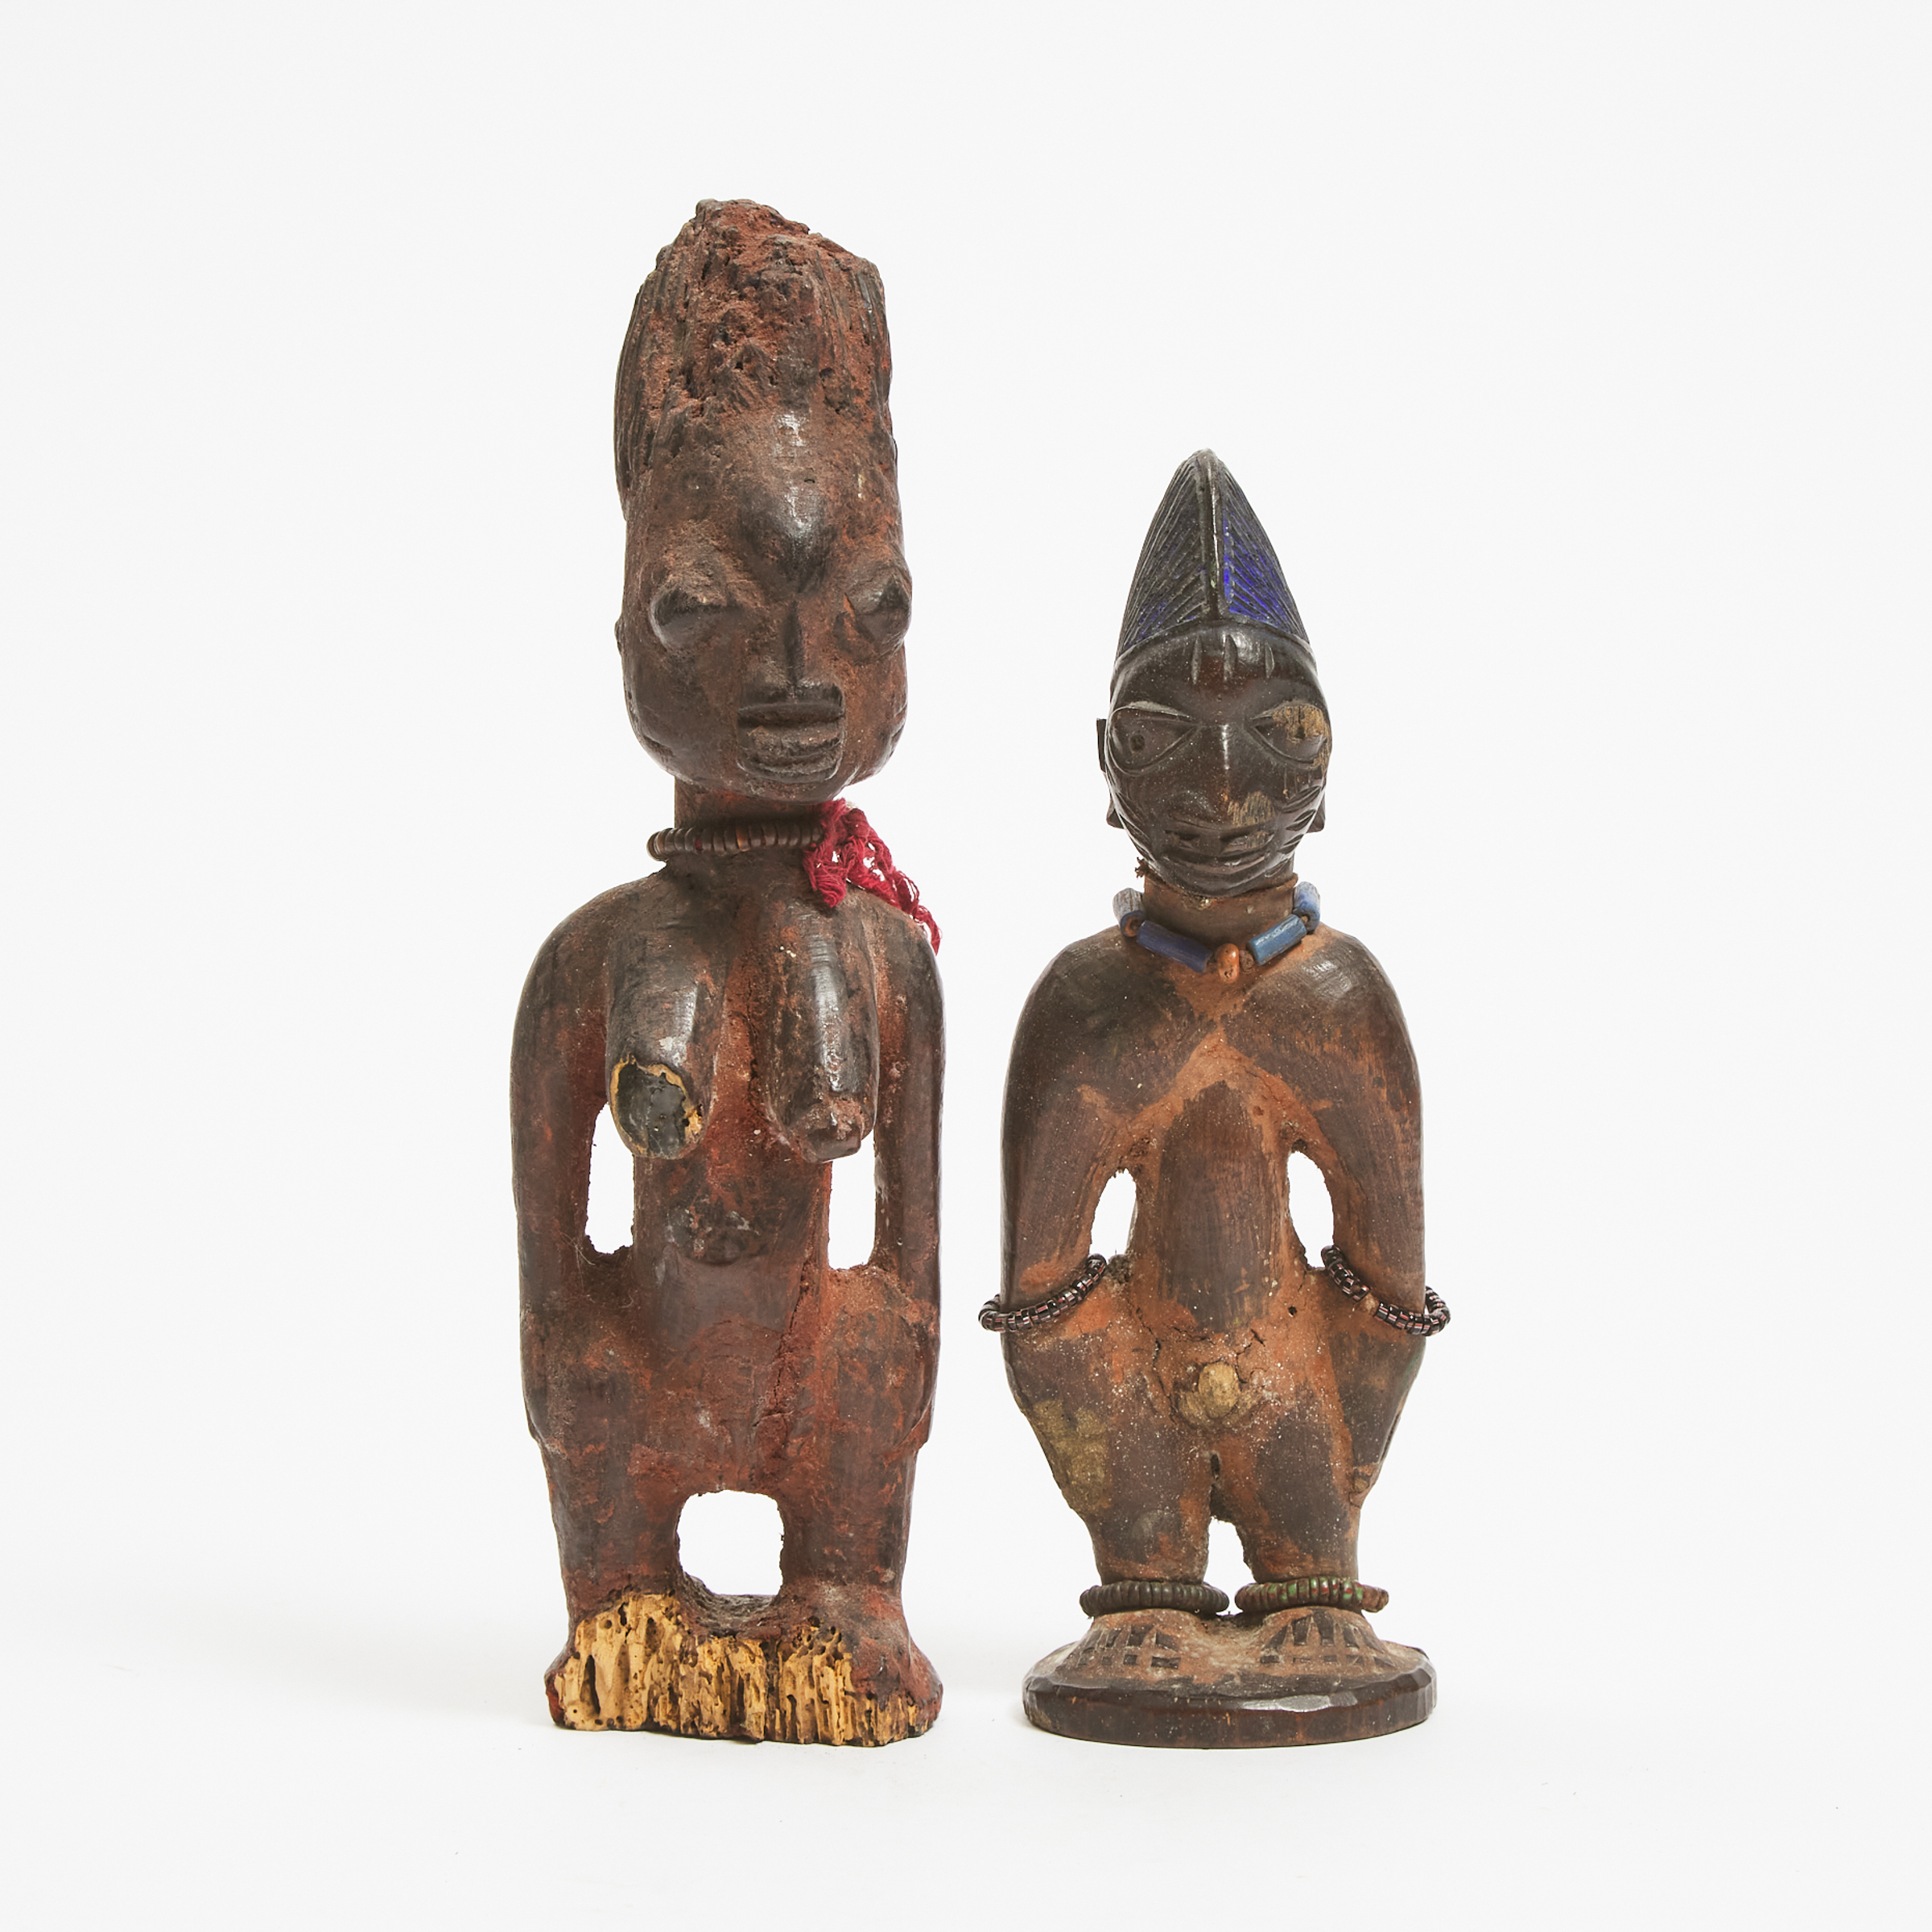 Two Yoruba Ibeji Figures, Nigeria, West Africa, early to mid 20th century